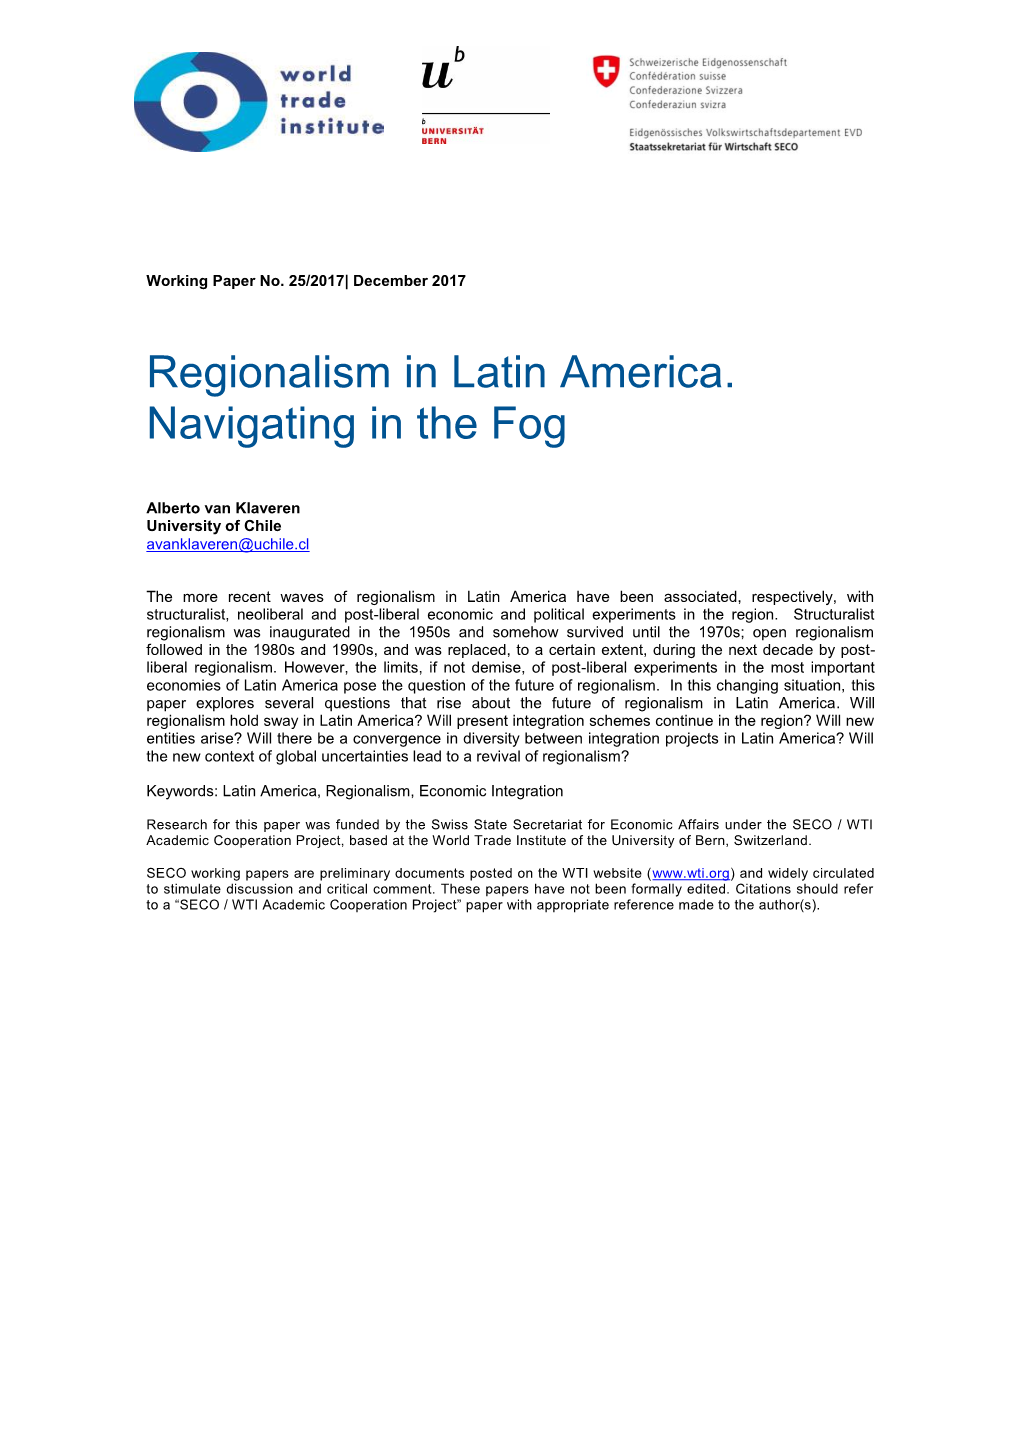 Regionalism in Latin America. Navigating in the Fog